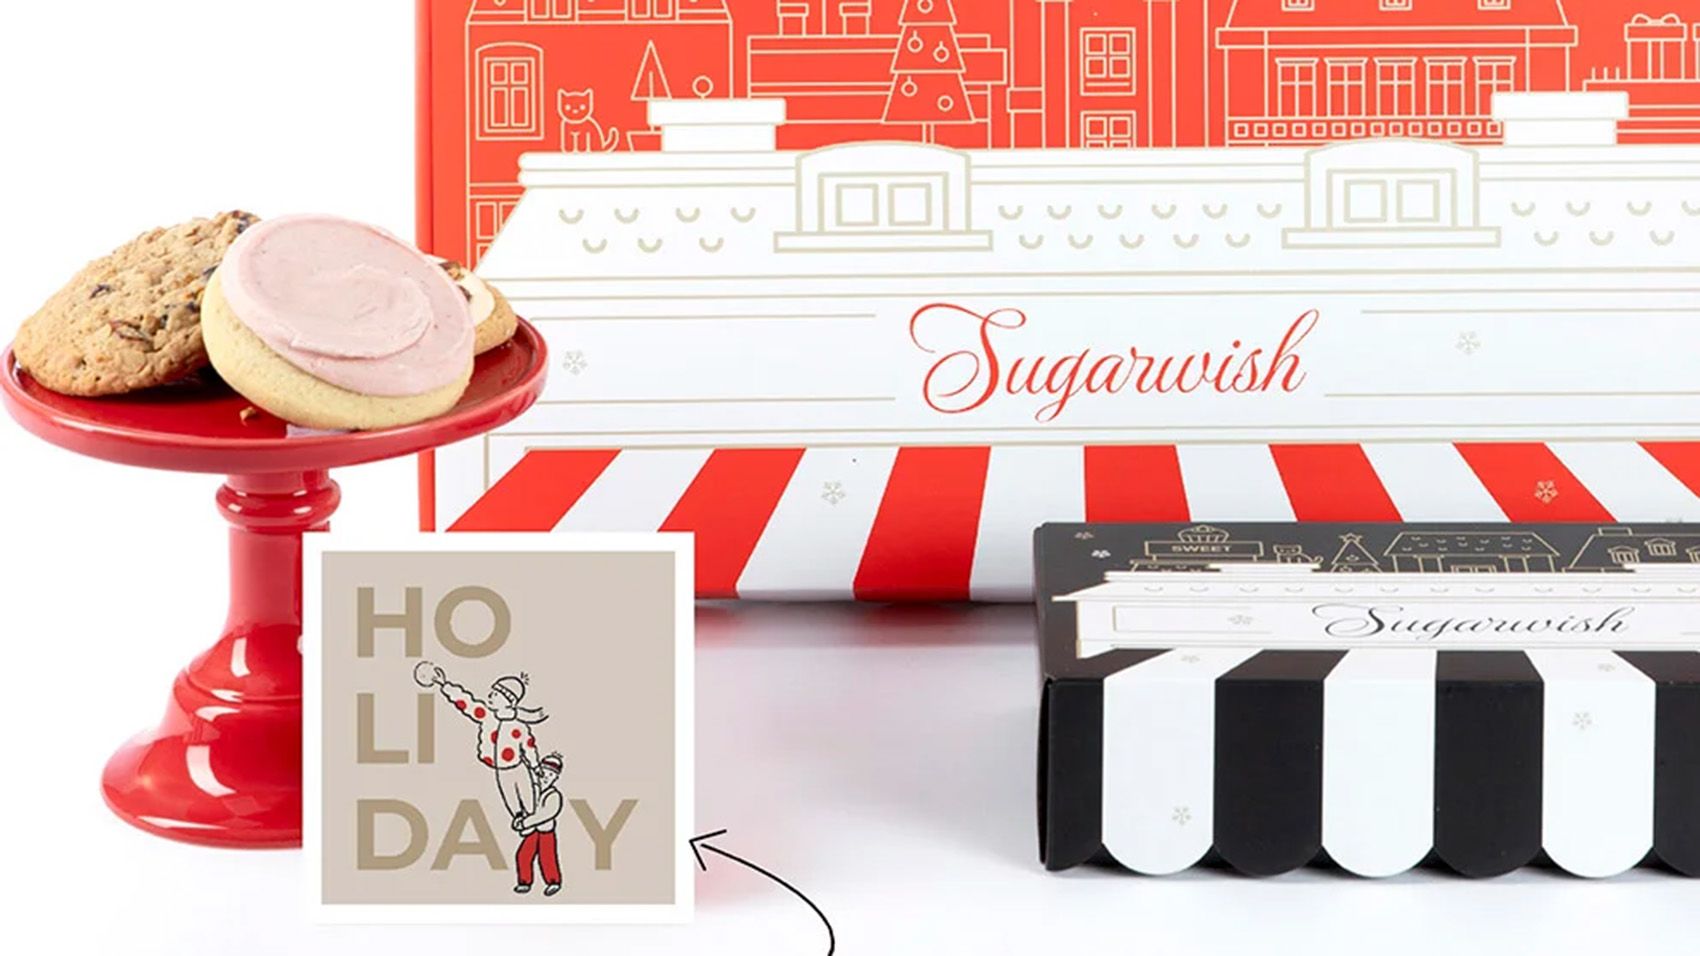 https://media.cnn.com/api/v1/images/stellar/prod/sugarwish-holiday-treats-product-card-cnnu.jpg?c=original